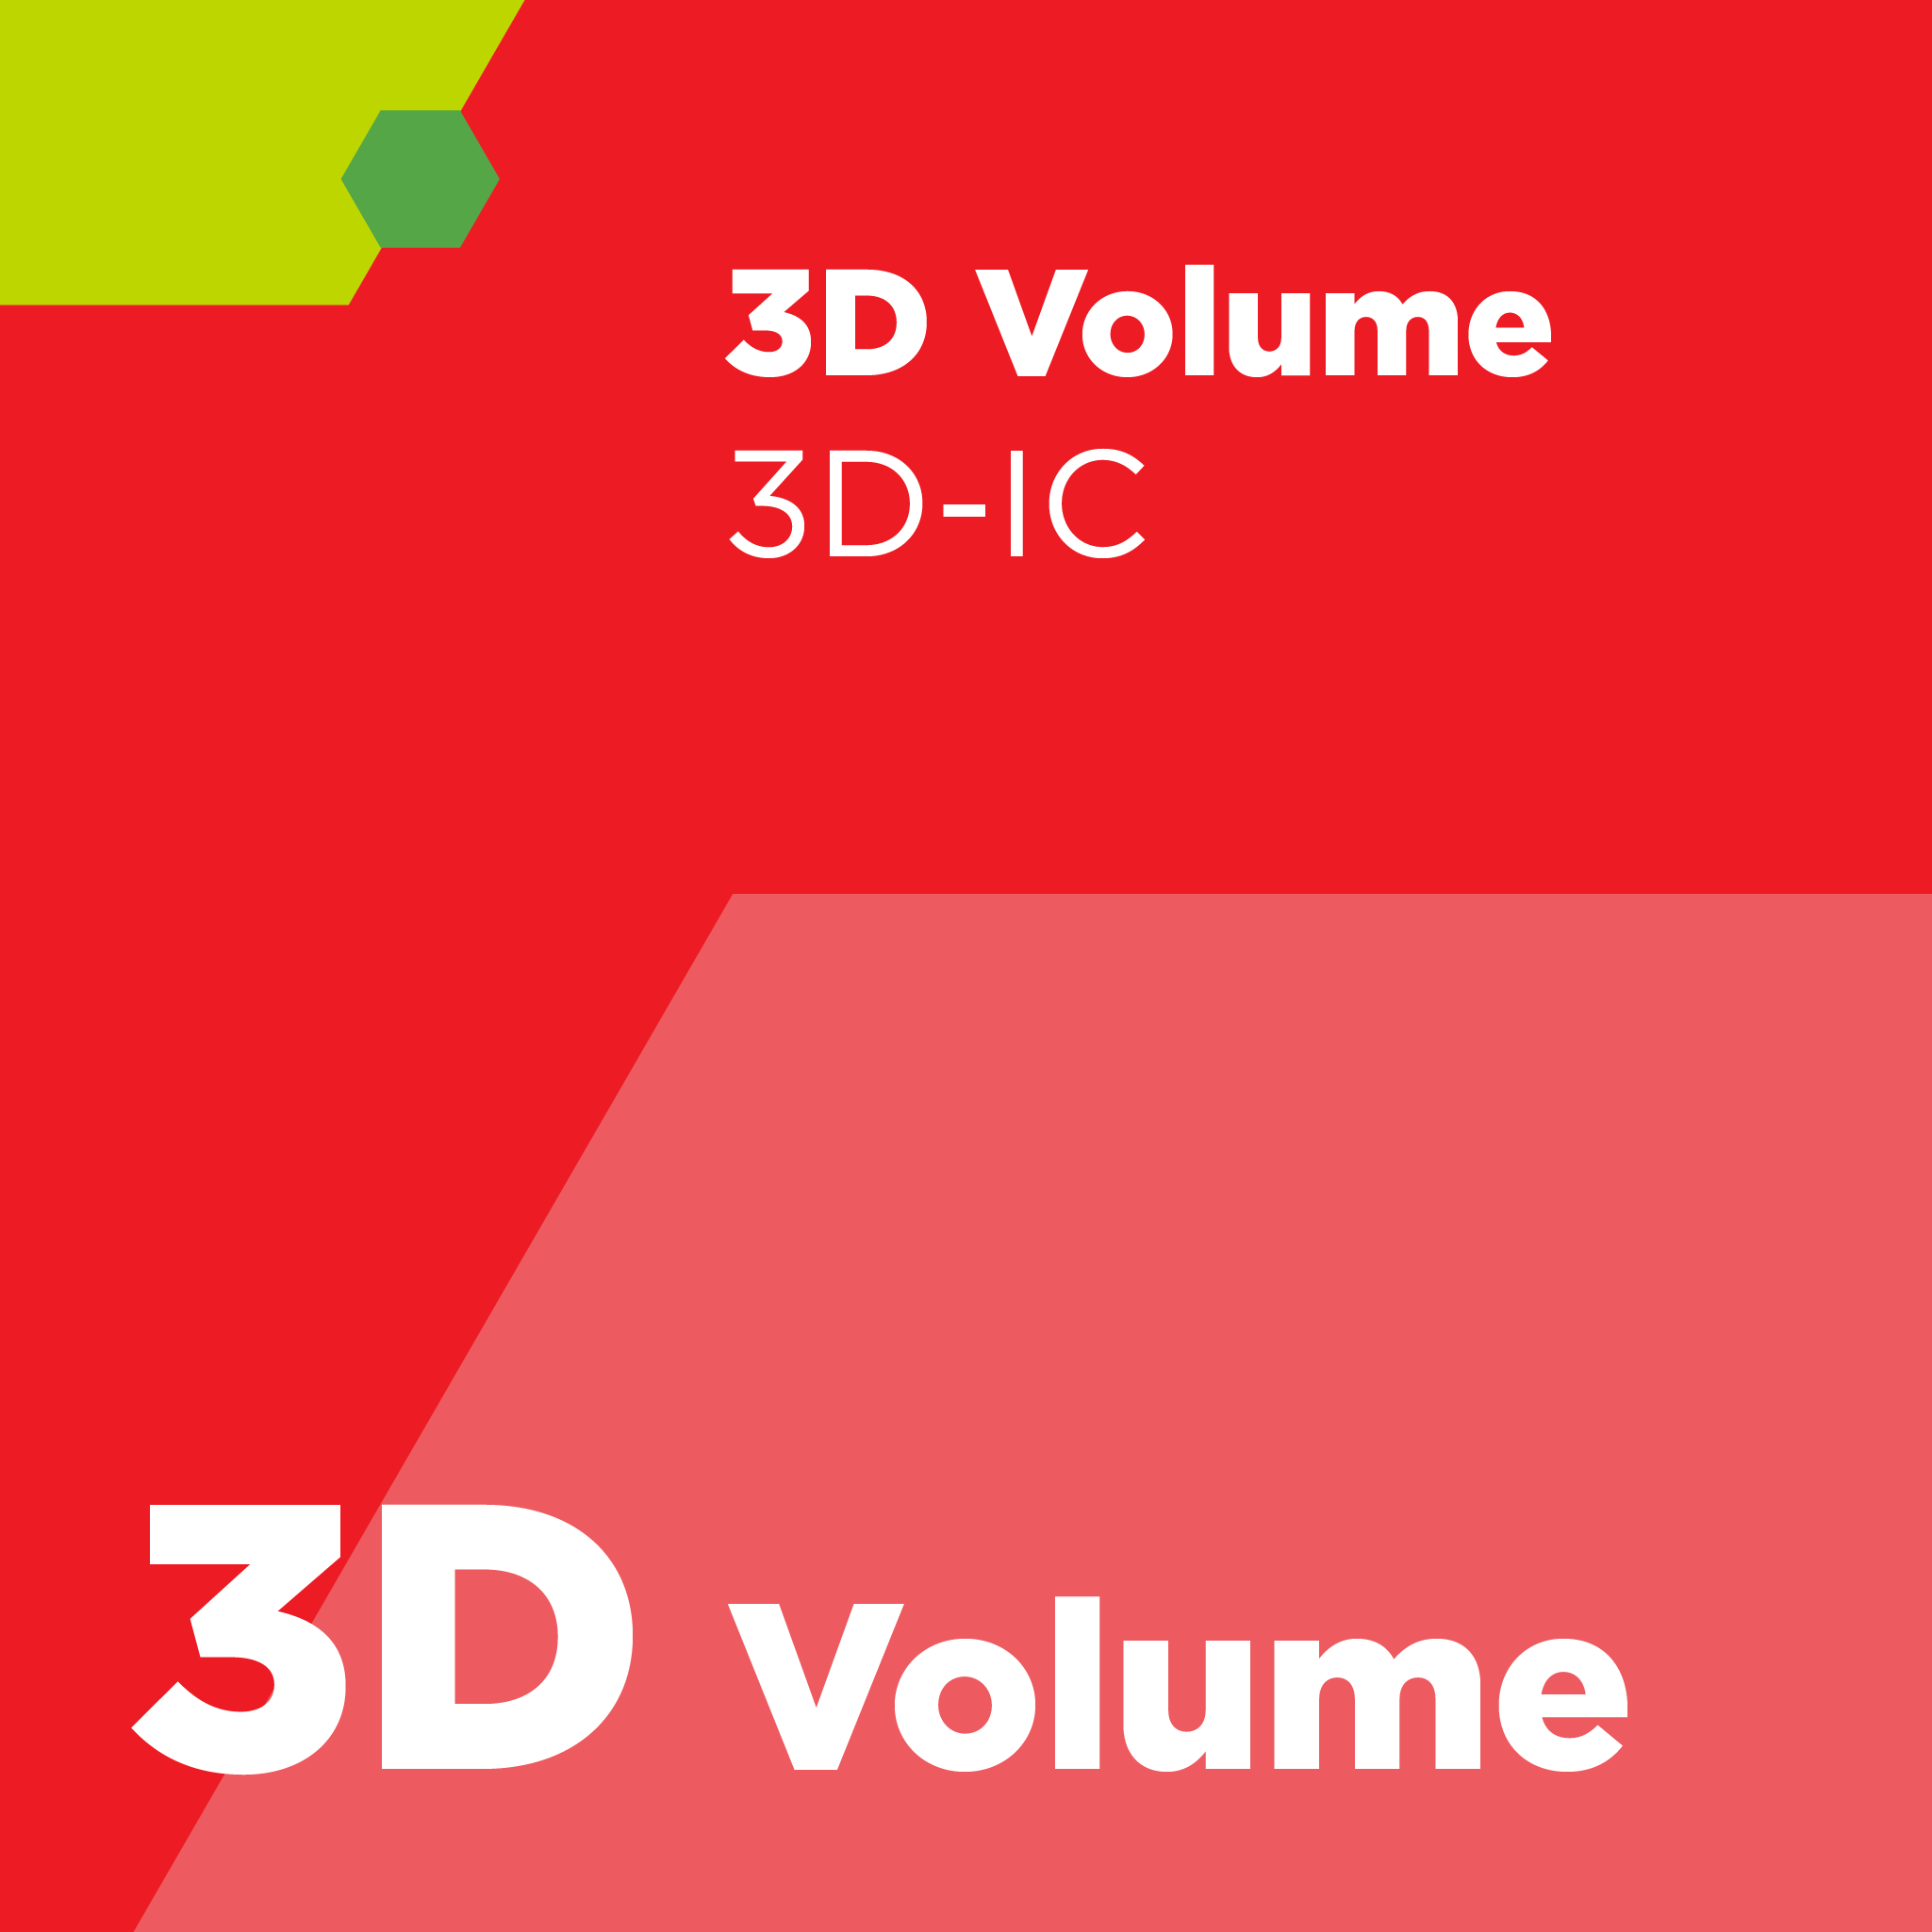 3D01300 - SEMI 3D13 - Guide for Measuring Voids in Bonded Wafer Stacks